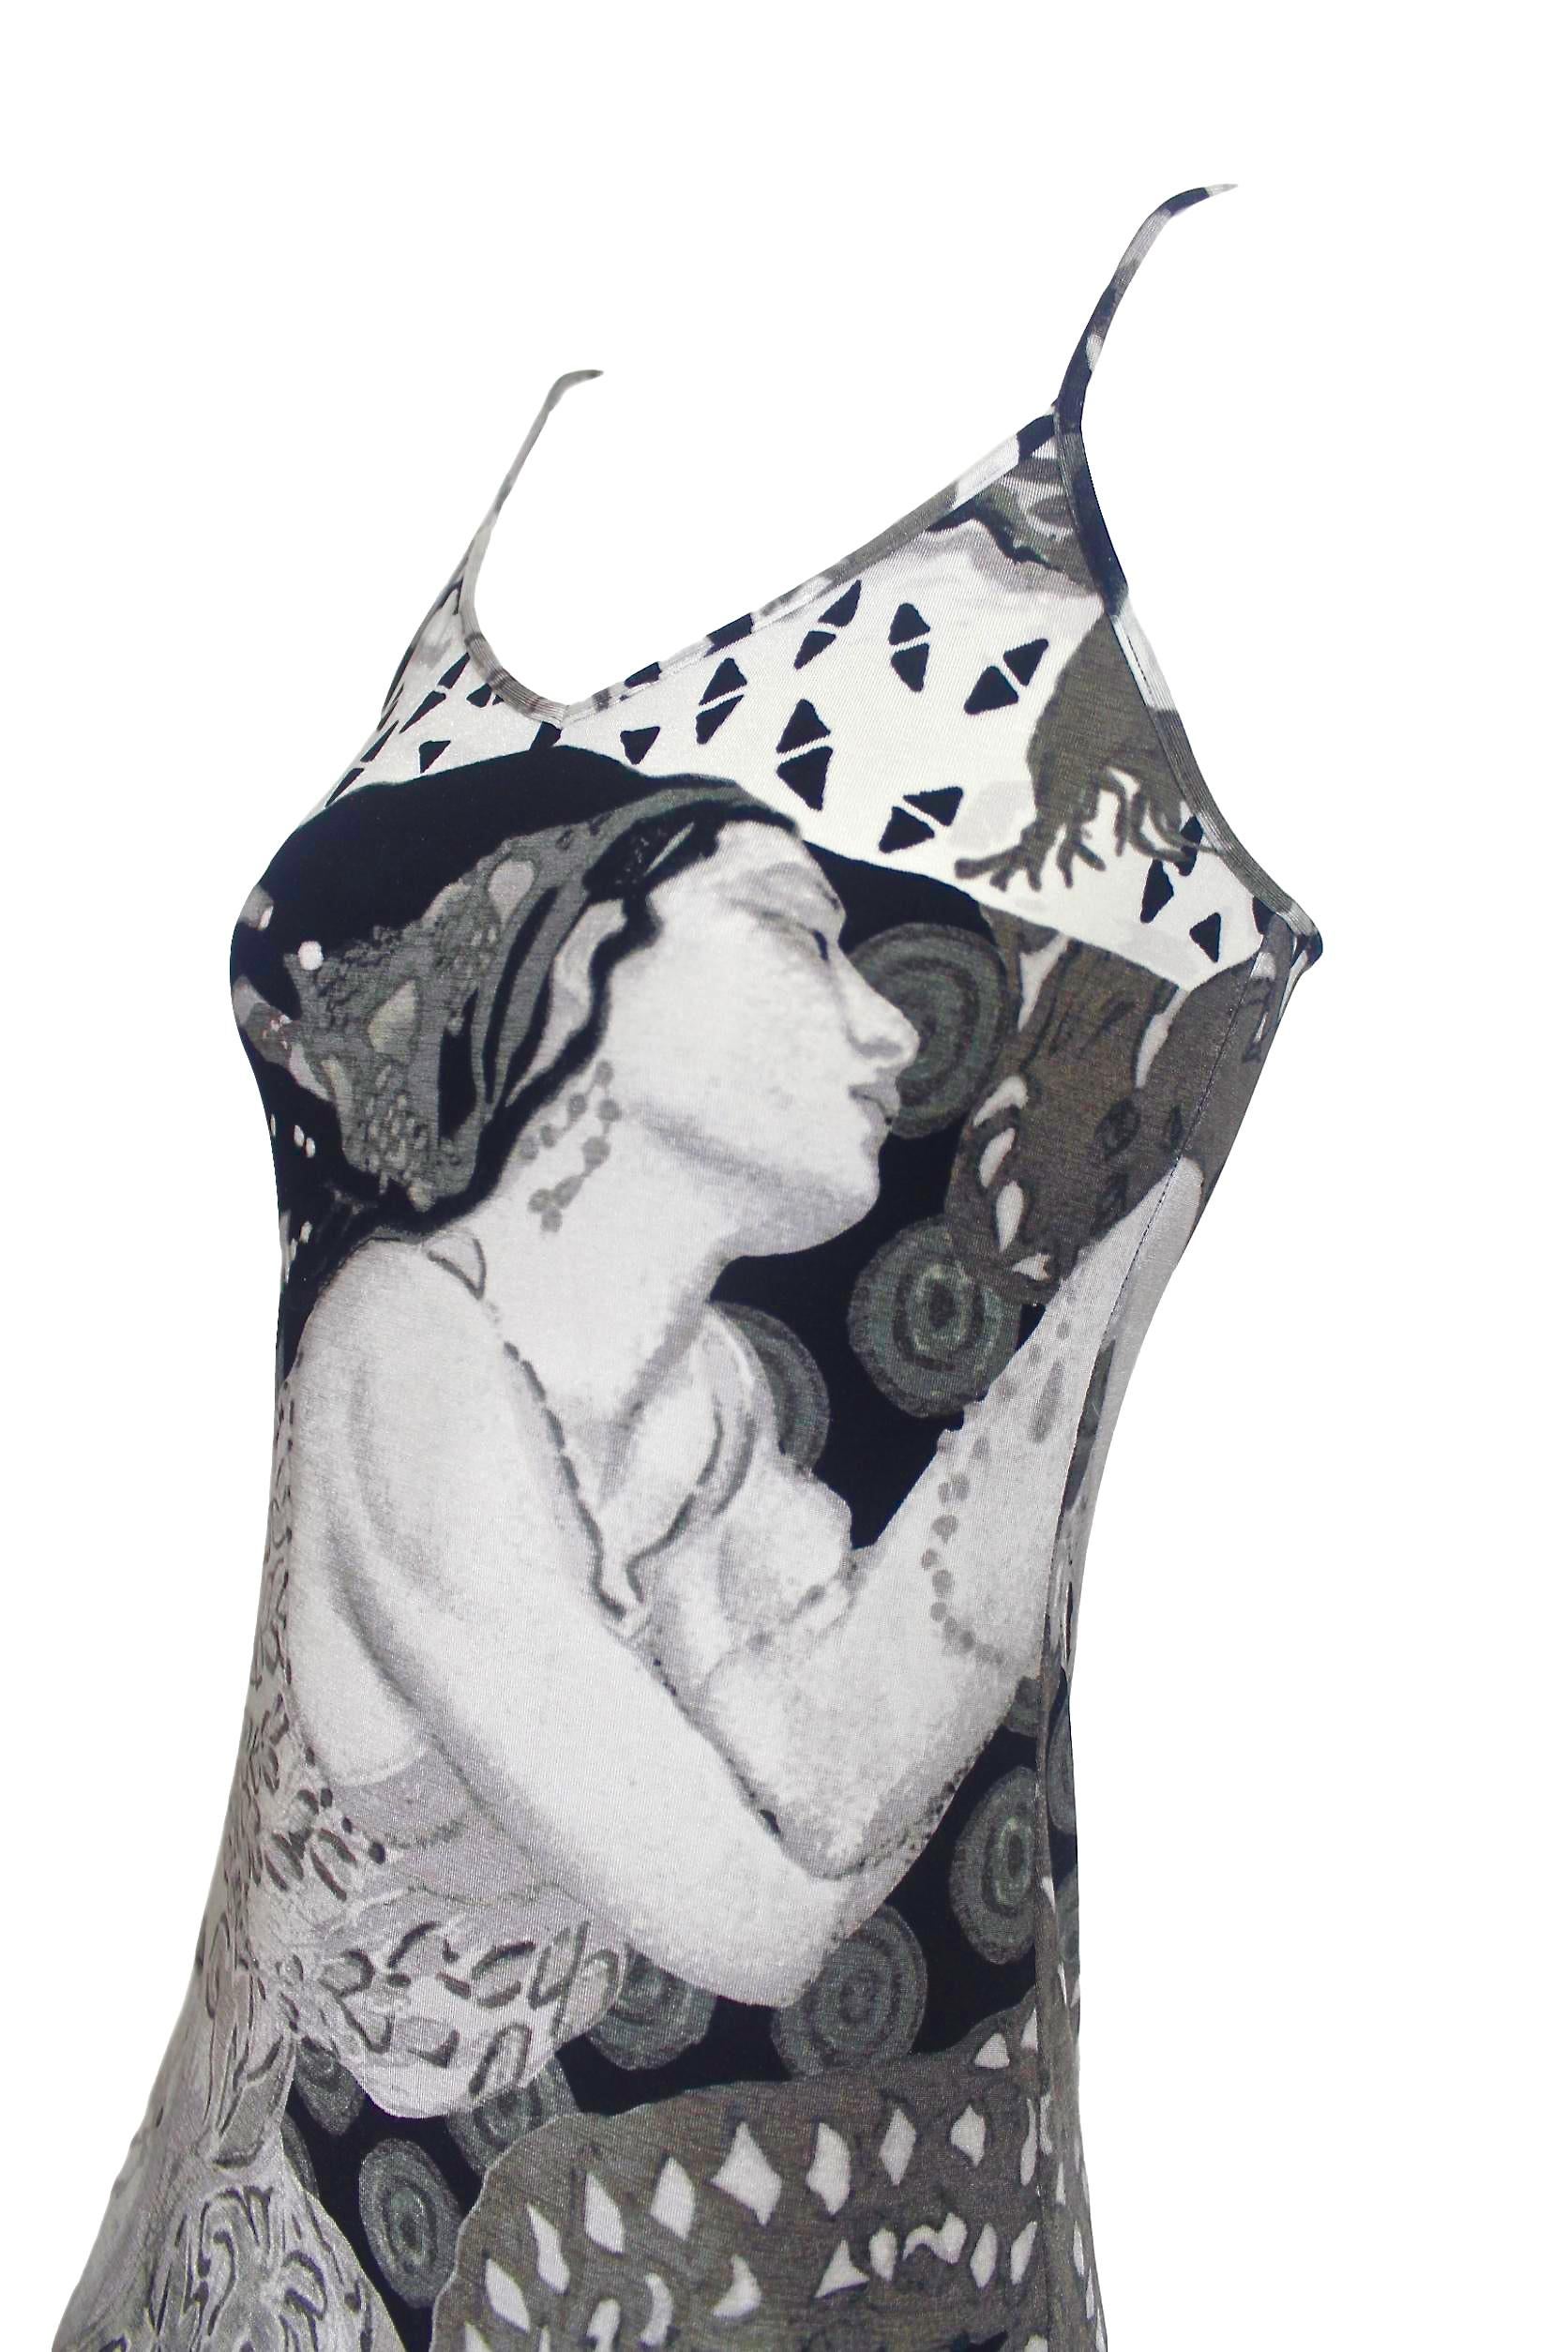 Jean Paul Gaultier
Erte Print Summer Dress
Labelled size 40
Excellent Condition